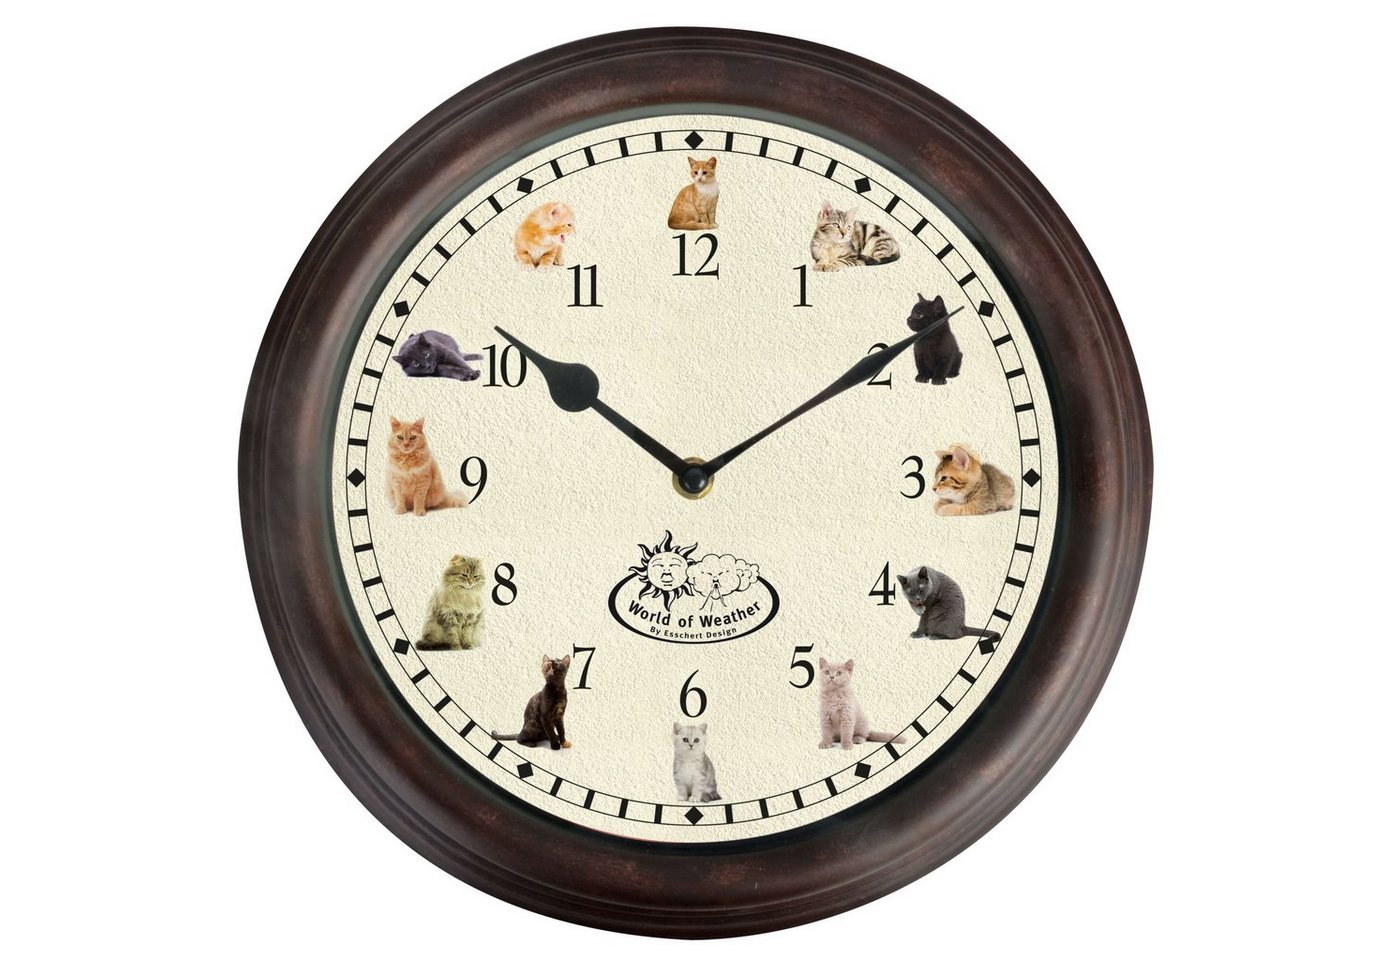 Rivanto Wanduhr (Uhr mit Katzengeräuchenn, Durchmesser 30 cm) von Rivanto